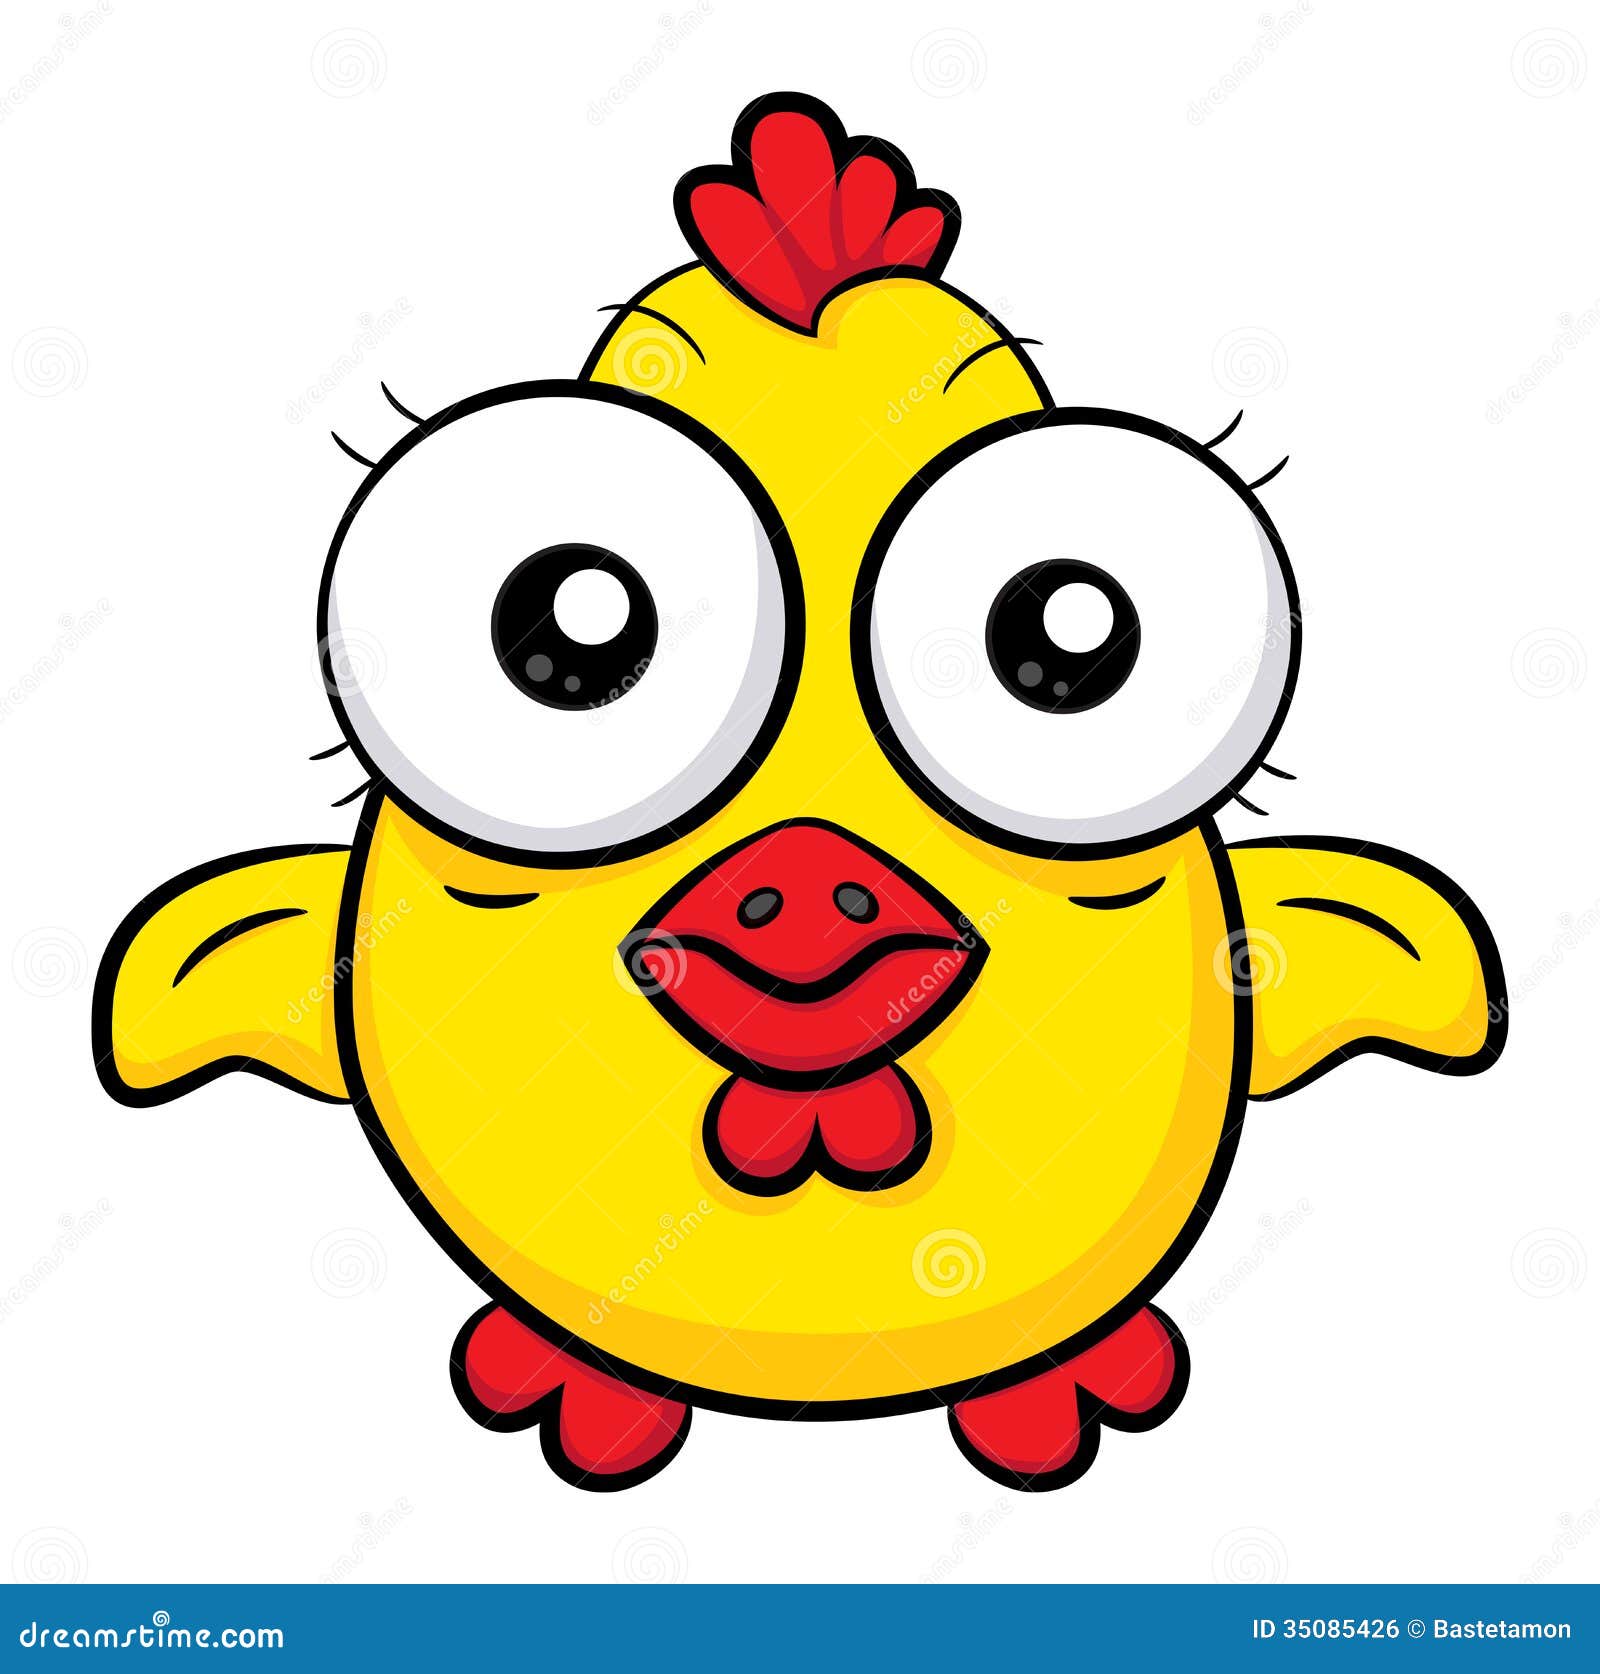 Cartoon Chicken Royalty Free Stock Image - Image: 35085426